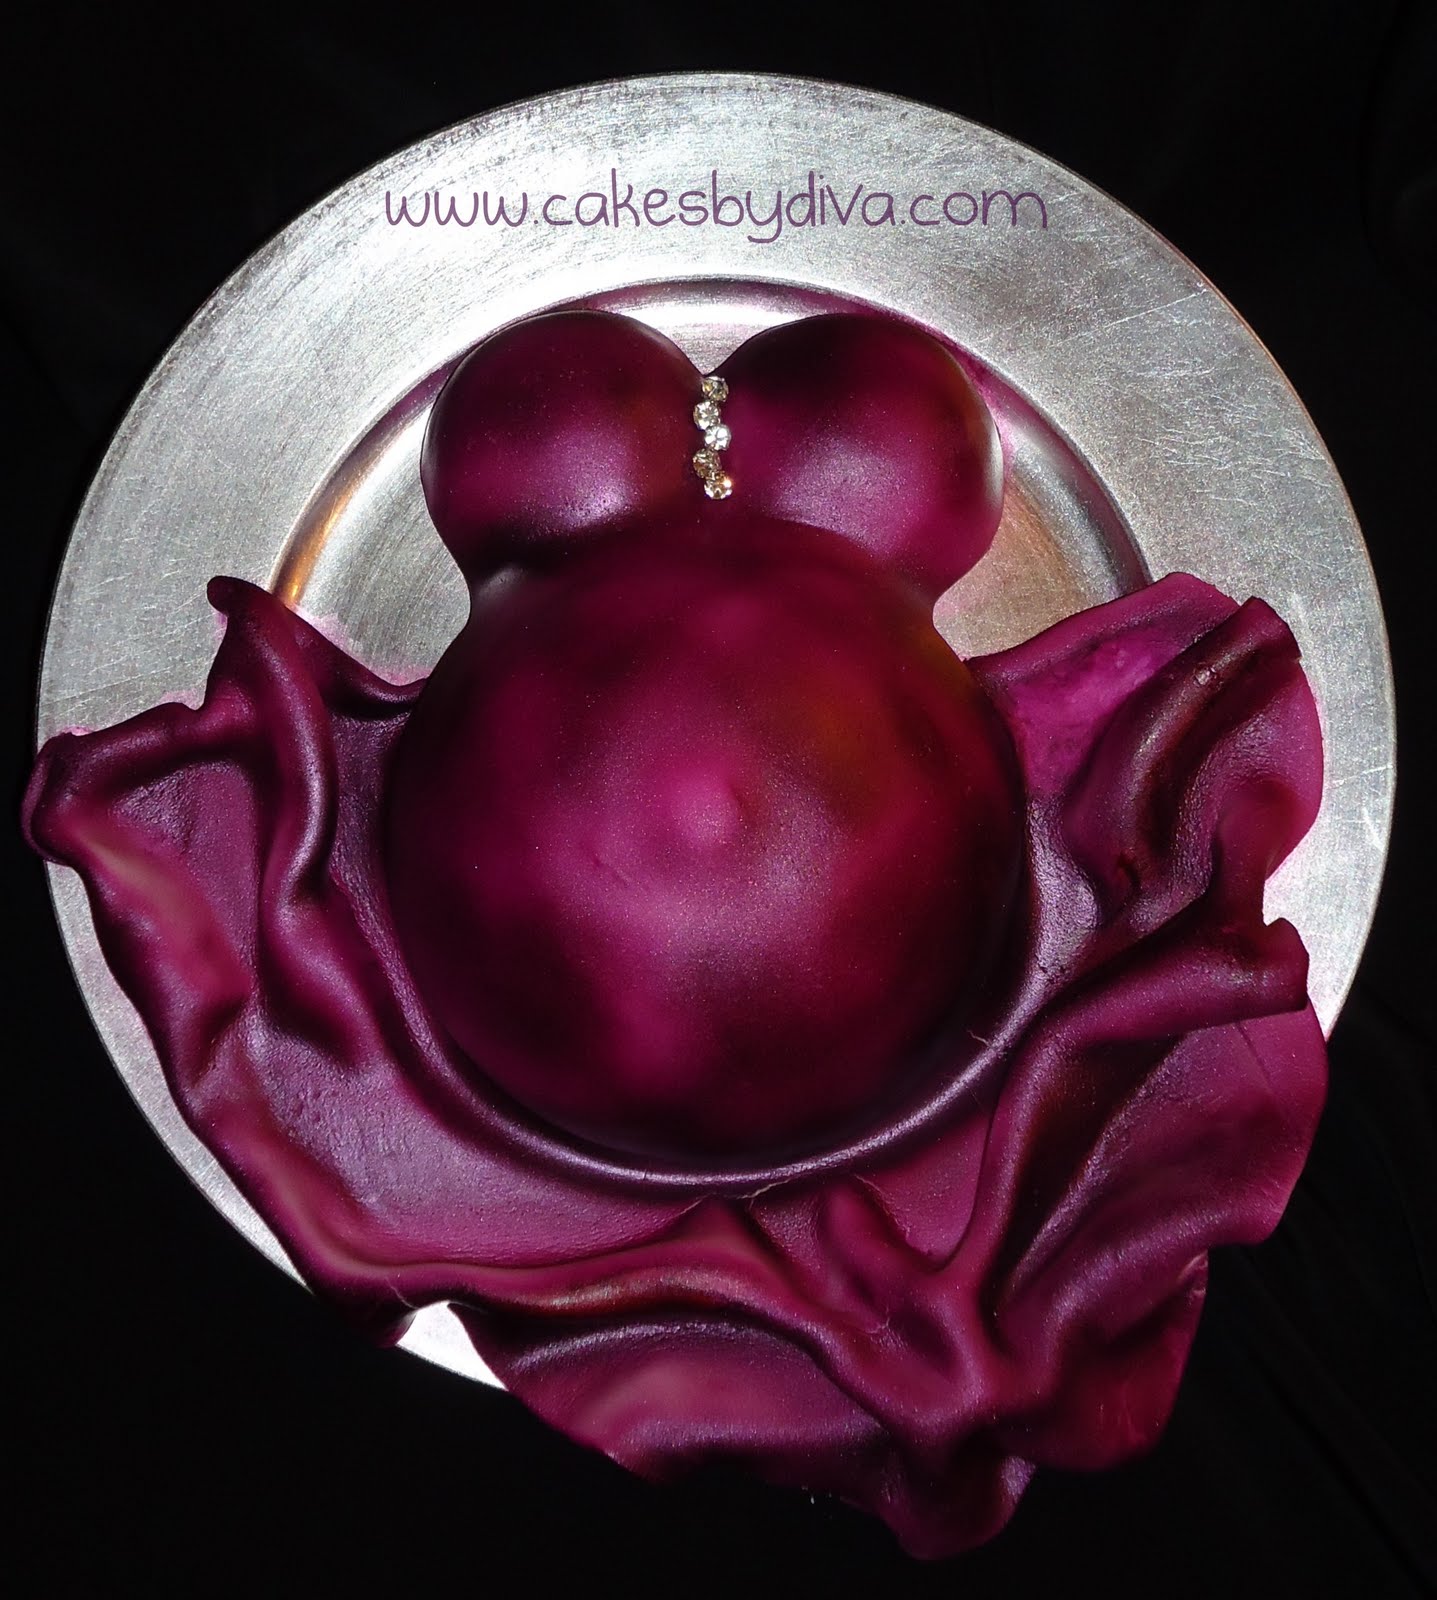 purple halloween wedding cakes Cakes By Diva